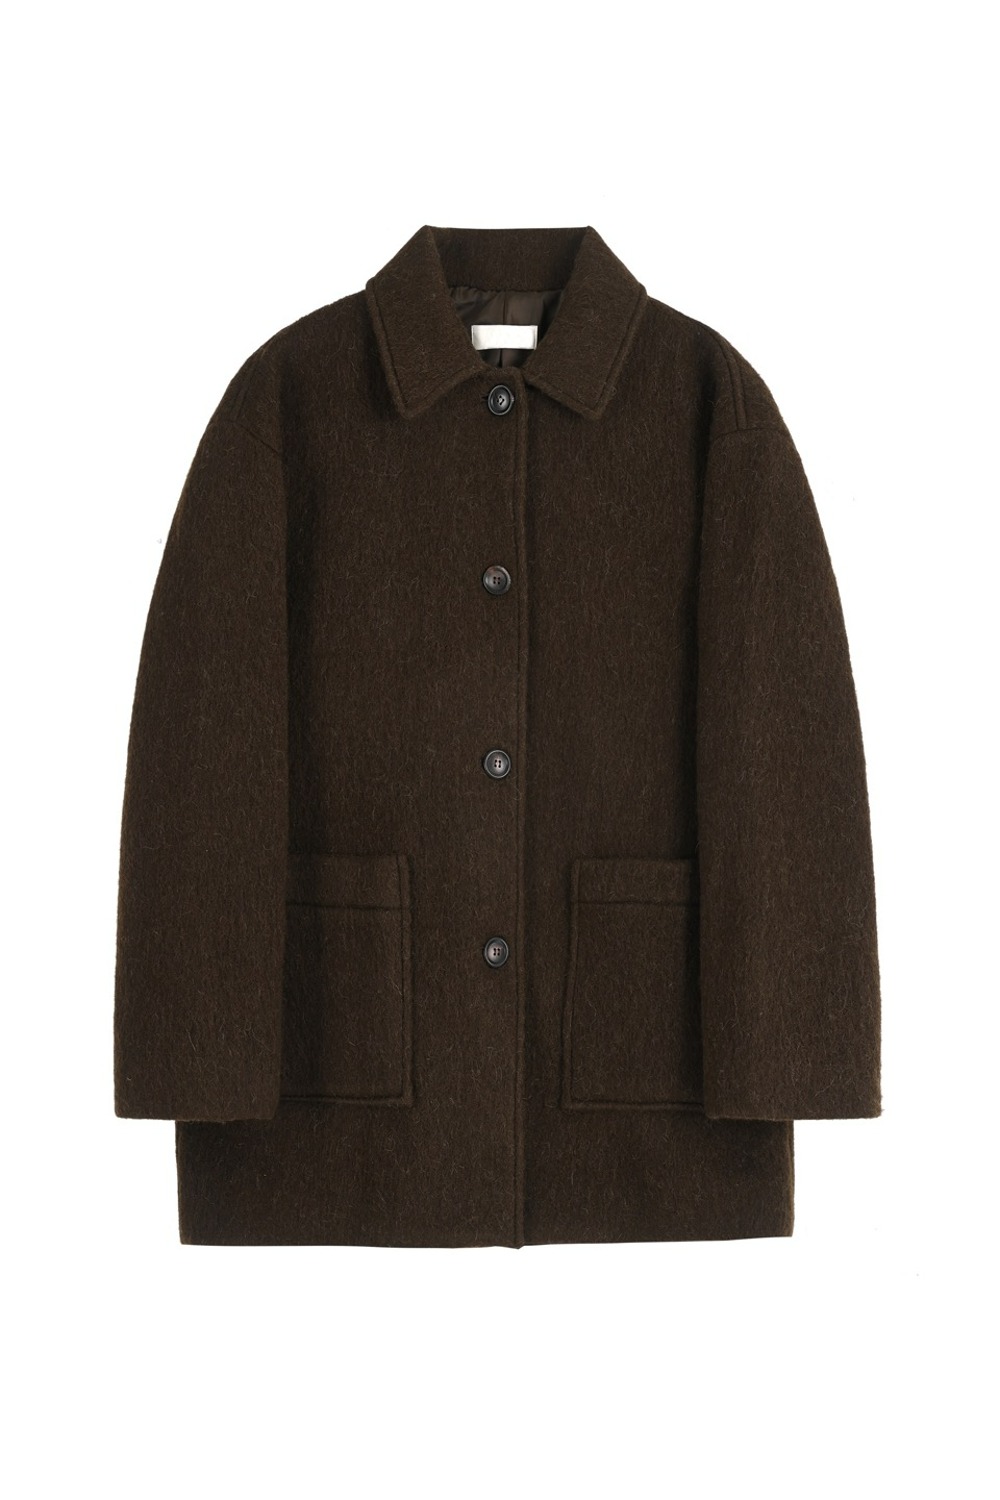 brown alpaca half coat(high-quality)